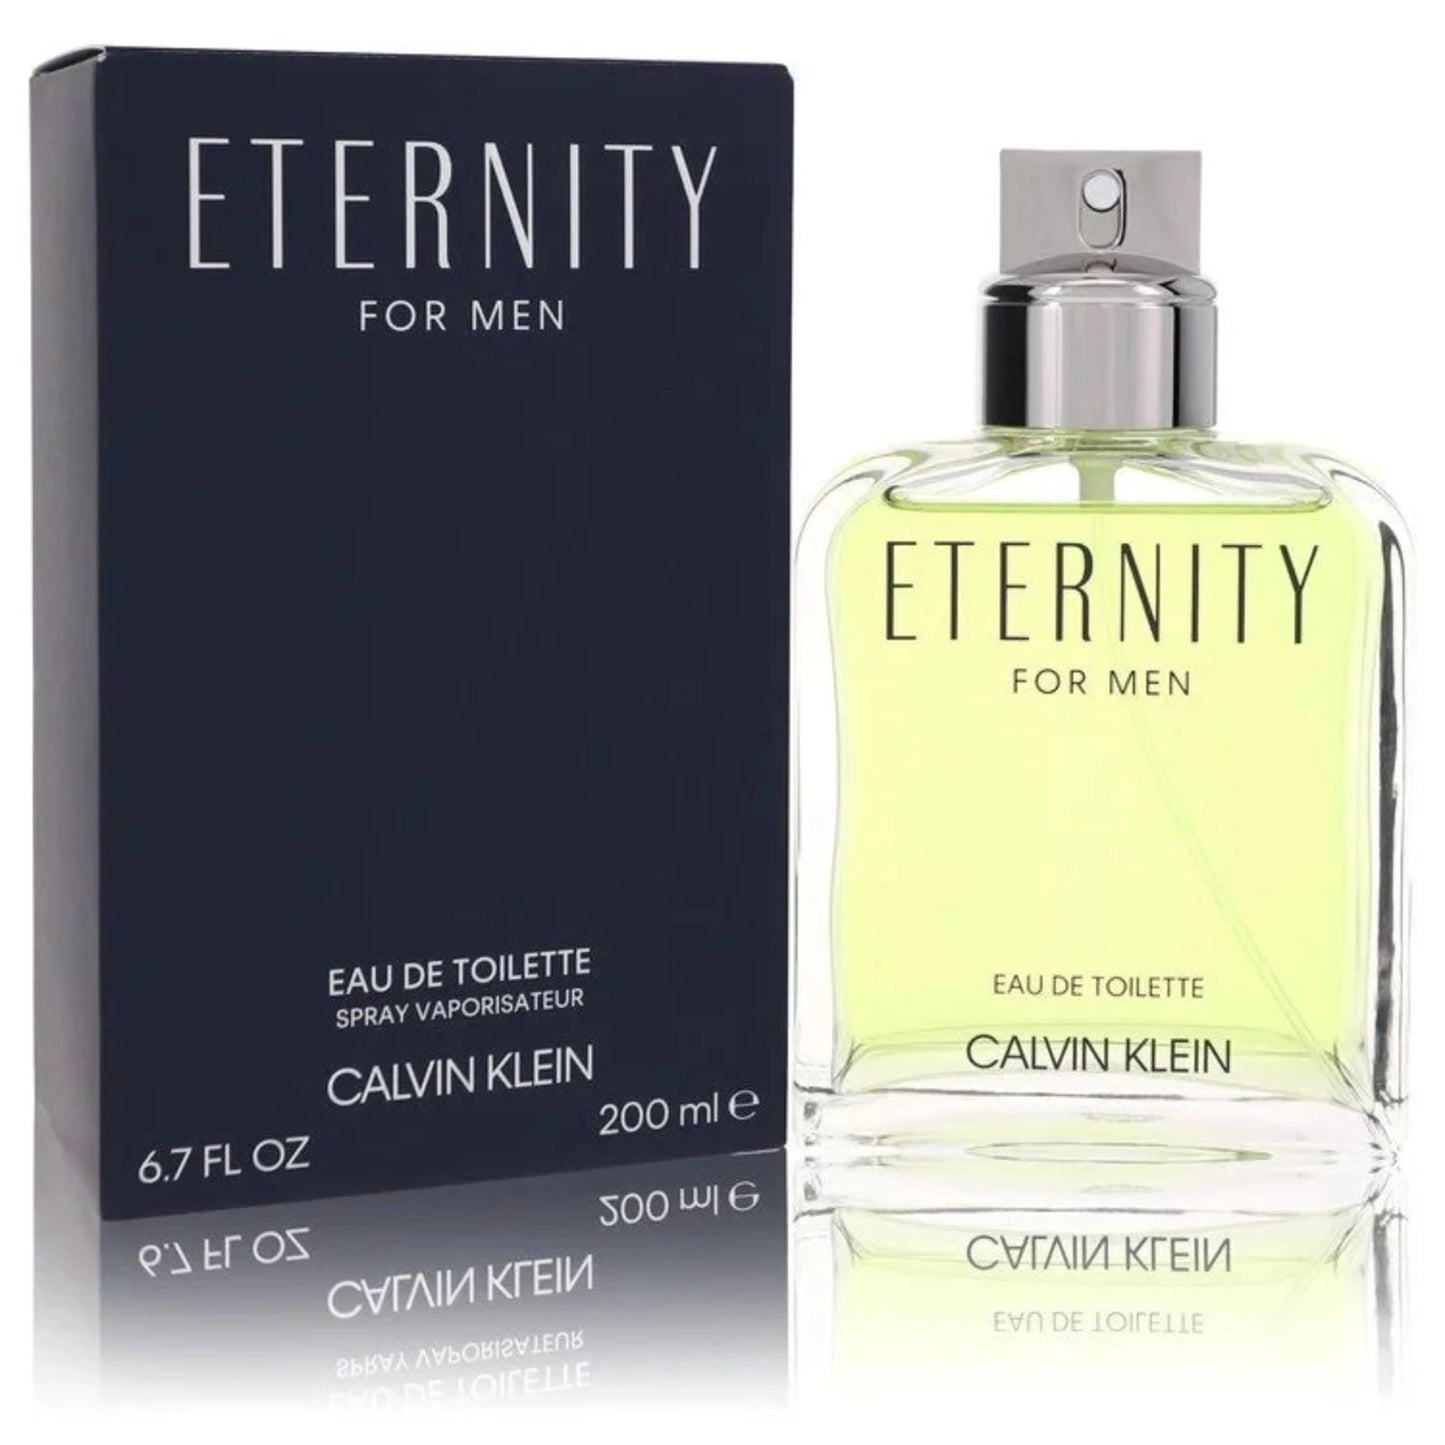 Eternity Eau De Toilette Spray By Calvin Klein for men